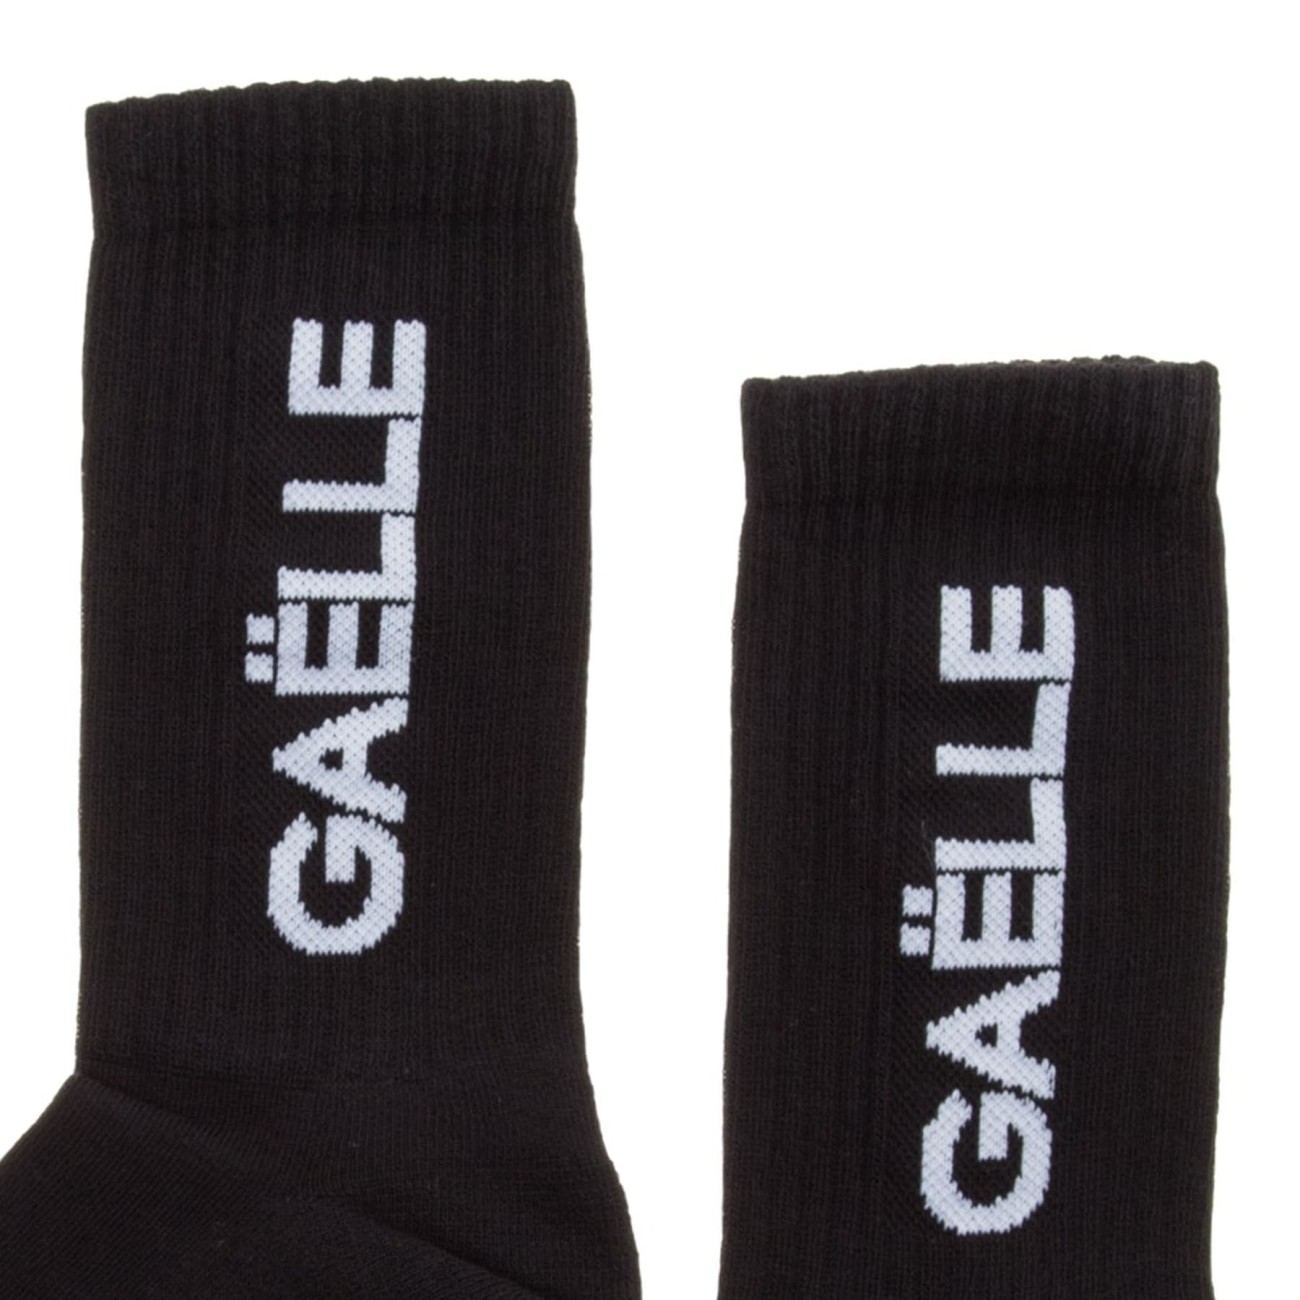 Gaelle terry socks black...